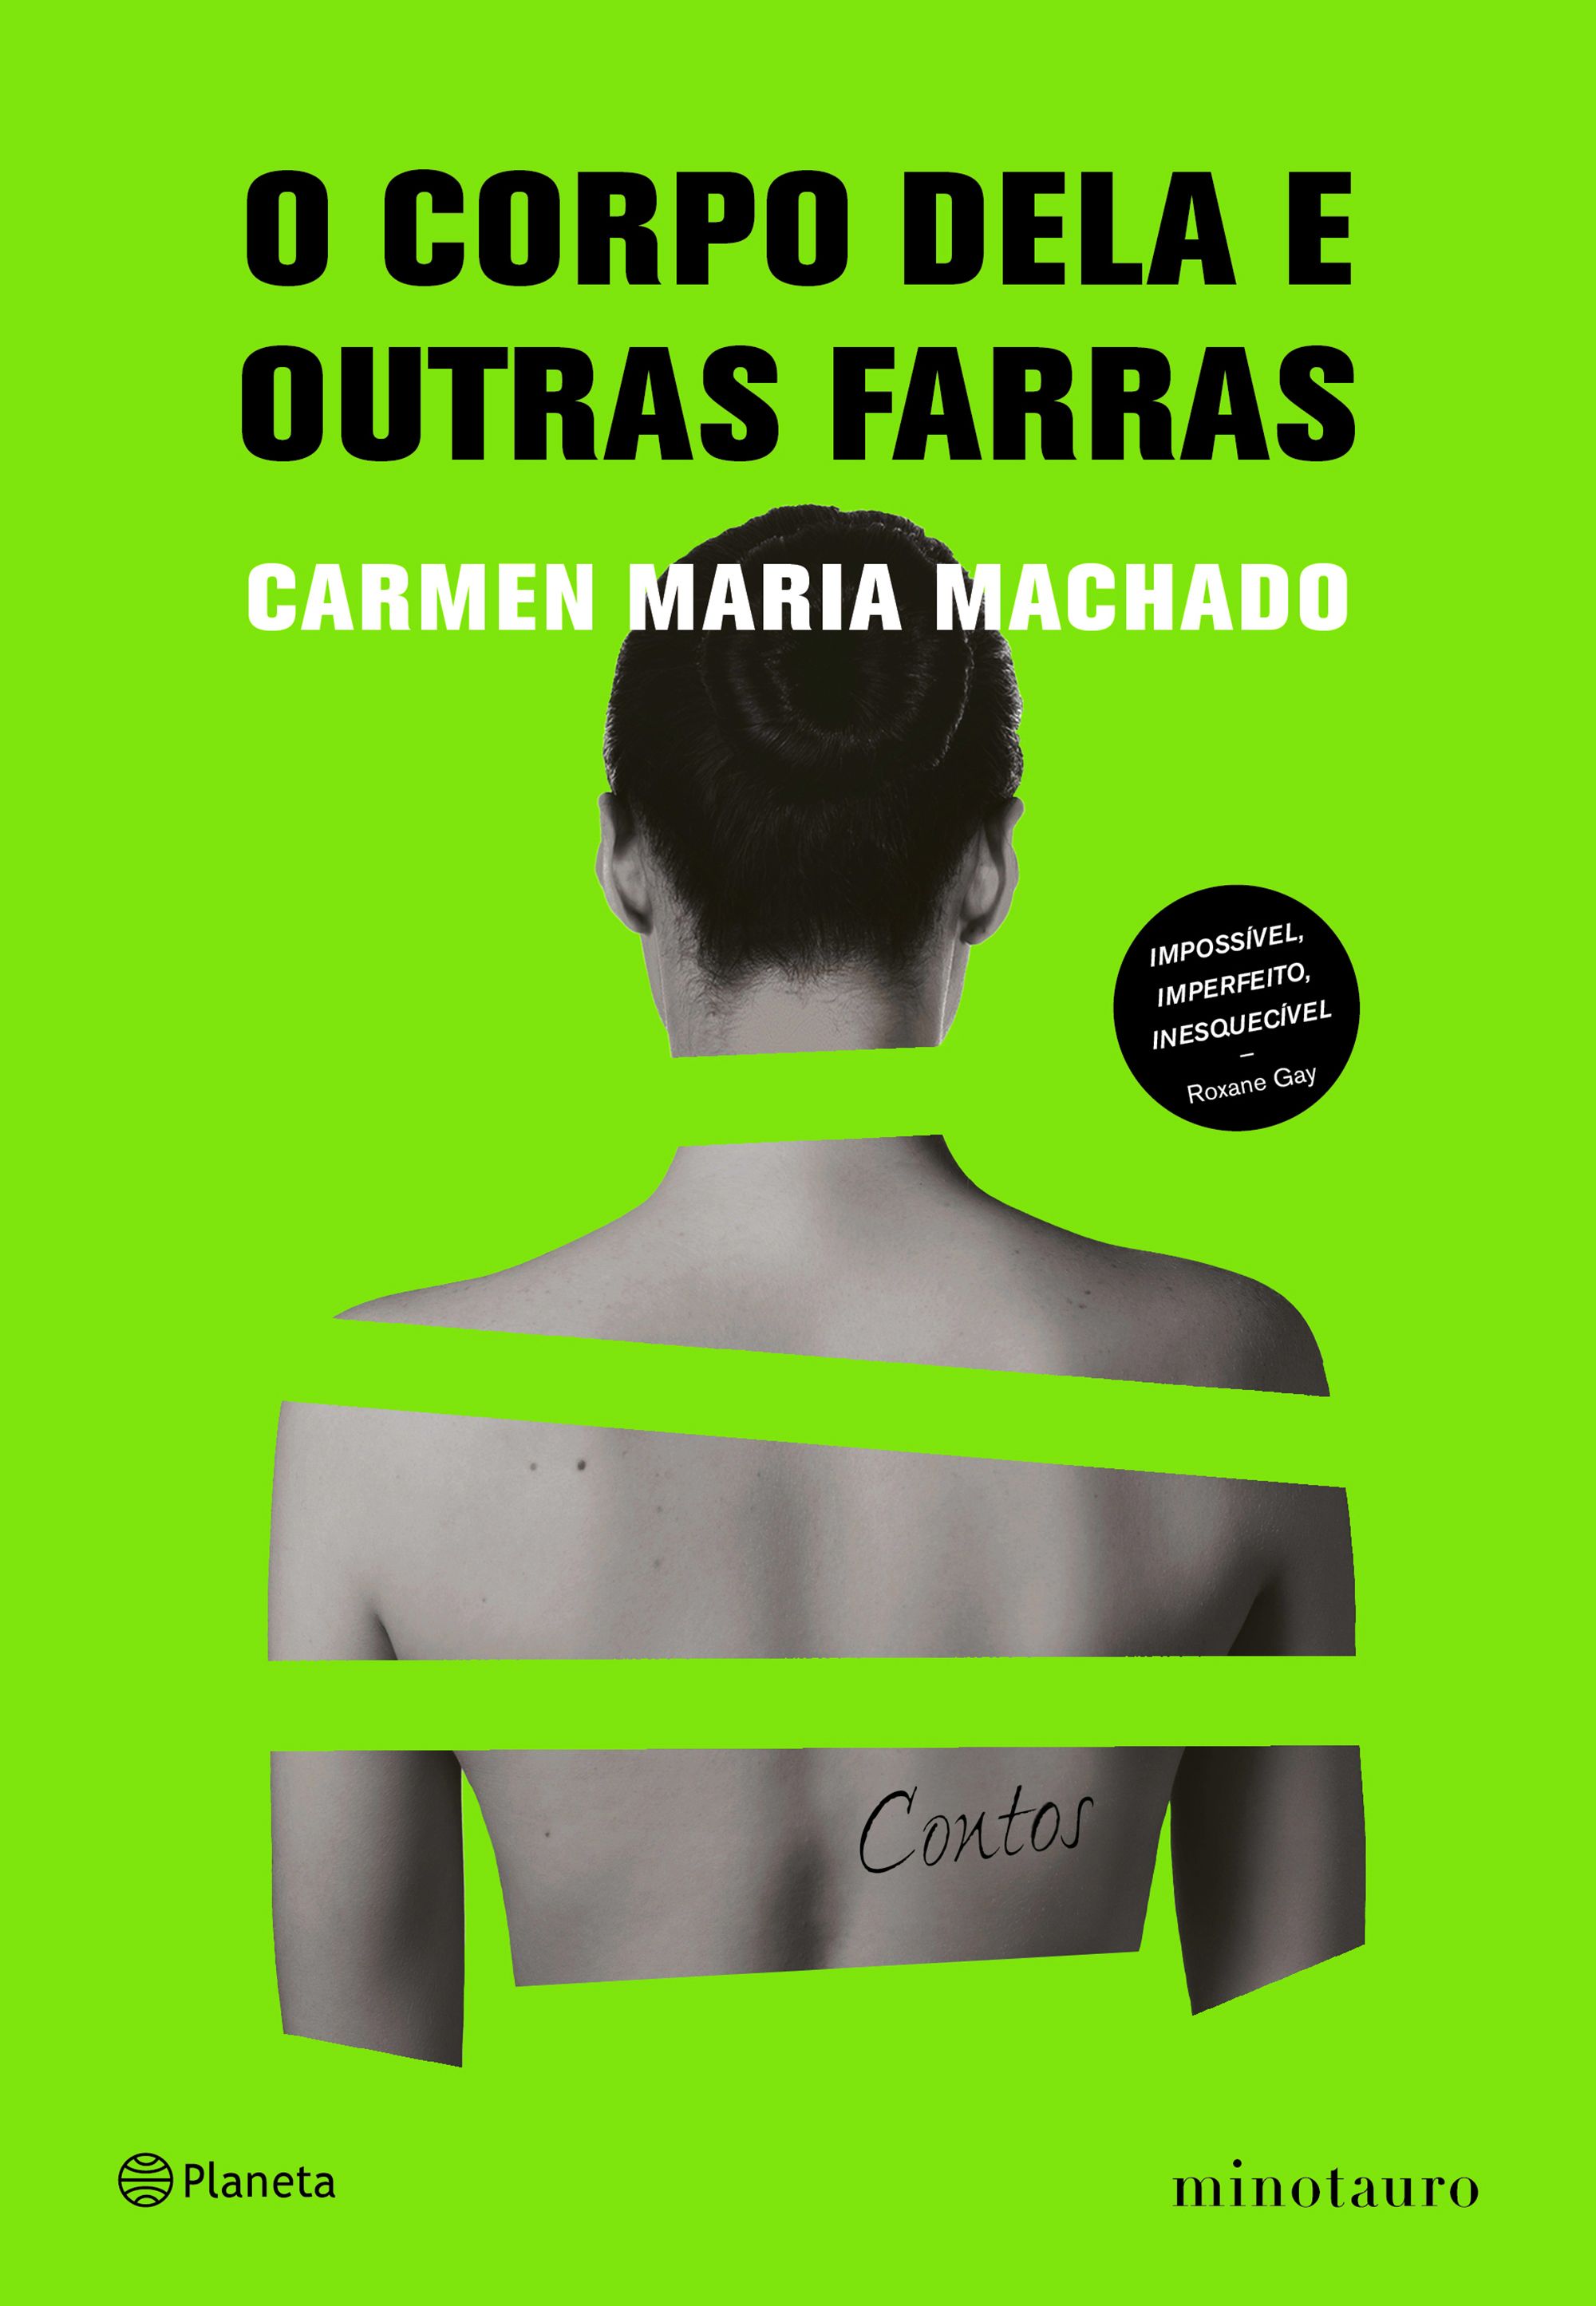 Foto da capa do livro "O corpo dela e outras farras", de Carmen Maria Machado (Planeta de Livros/Minotauro Editorial Brasil, 2018)